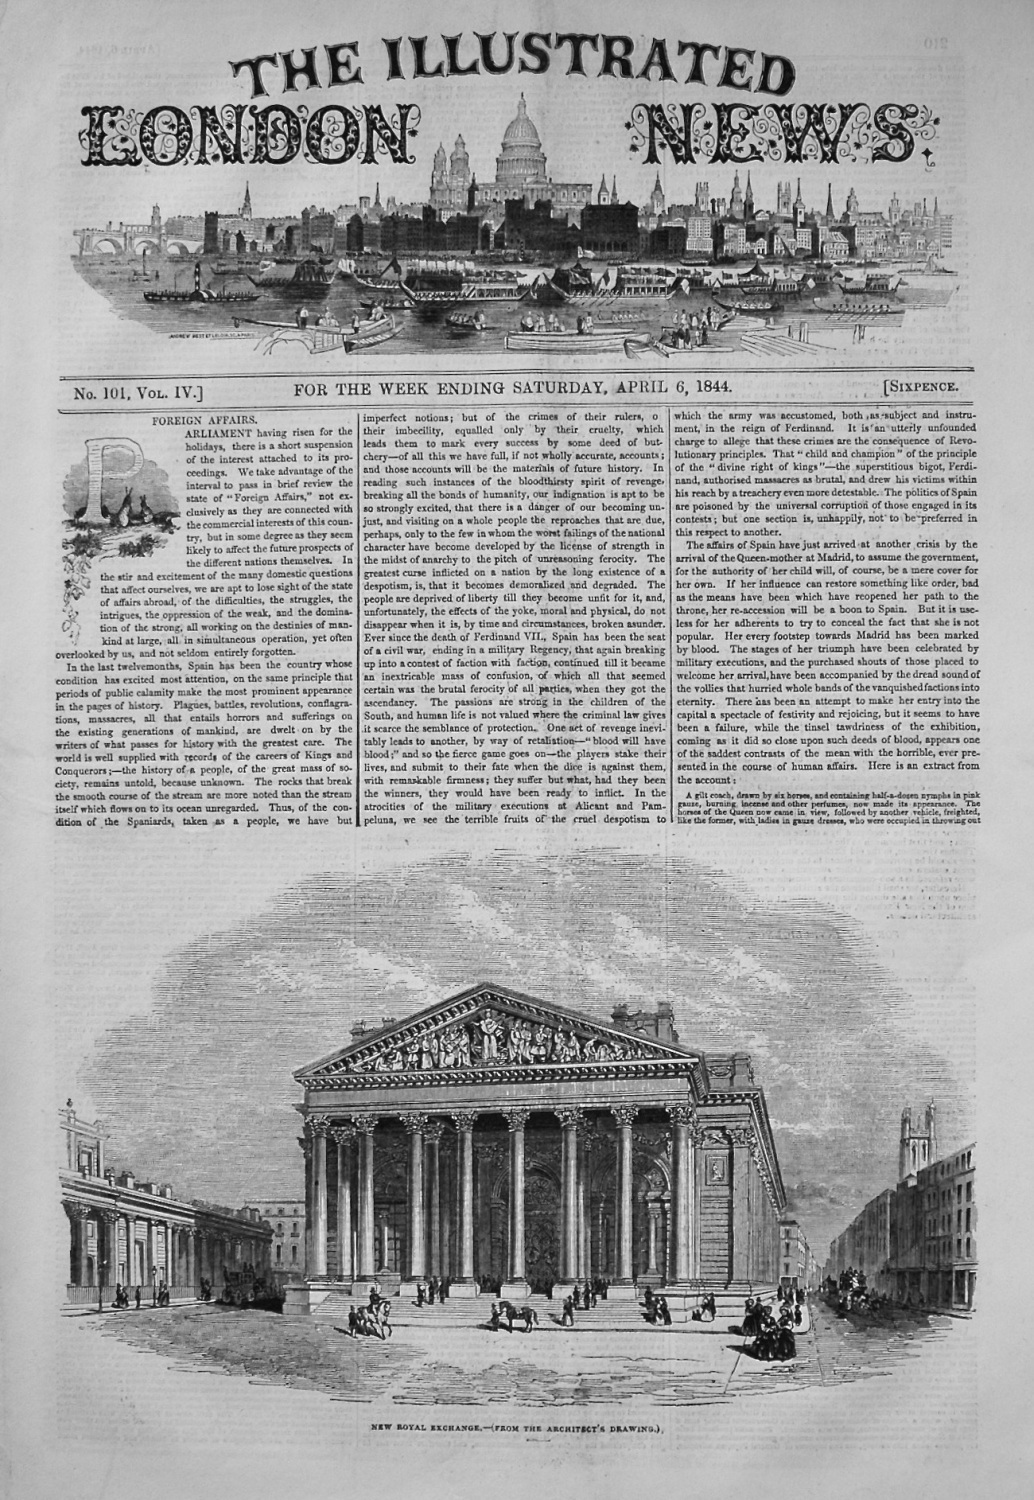 Illustrated London News. April 6th, 1844.